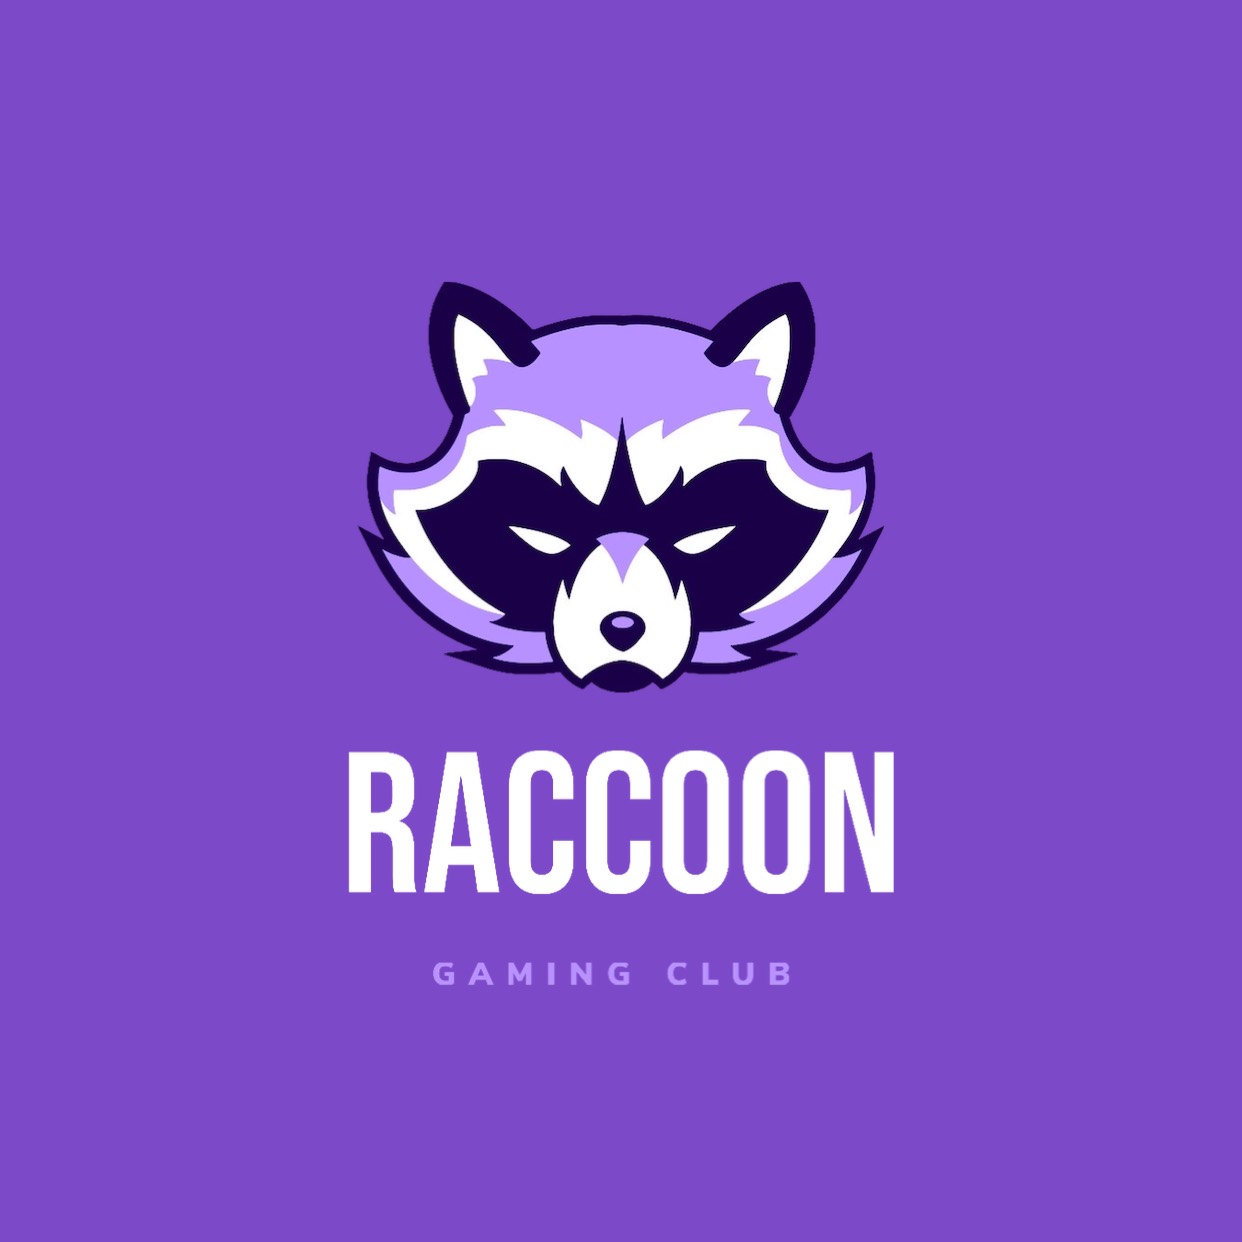 Gaming club raccon image purple gaming logo template